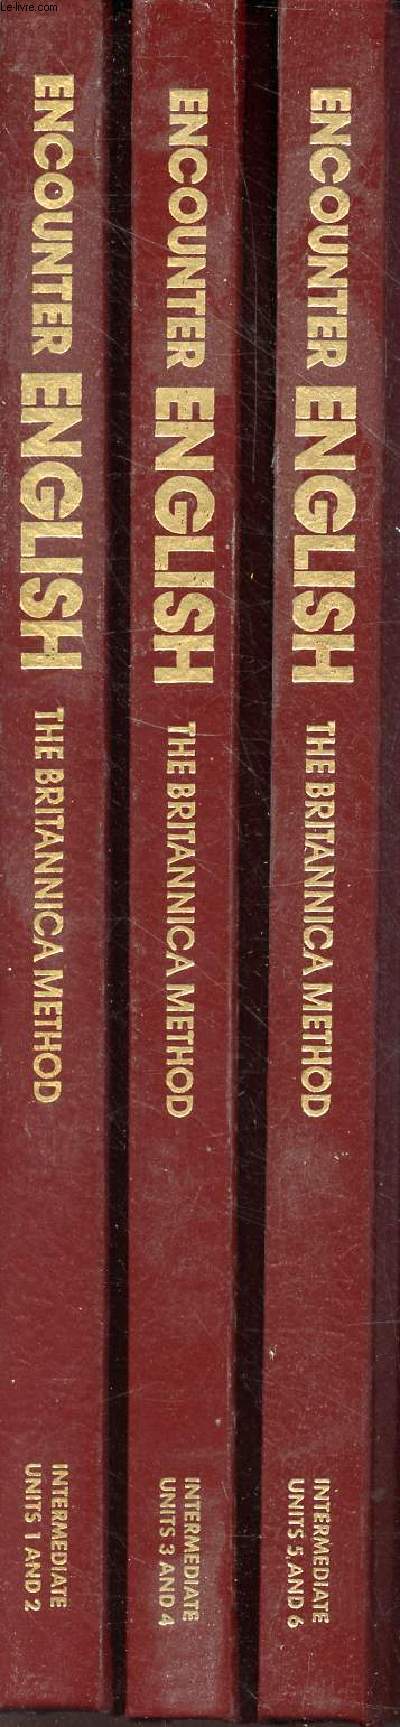 Encounter English - the Britannica Method - perfect your english - Intermediate - en 4 volumes (vol. 1:units 1 and 2 - vol. 2:units 3 and 4 - vol.3:units 5 and 6 - vol. 4: ouvrage explicatif)